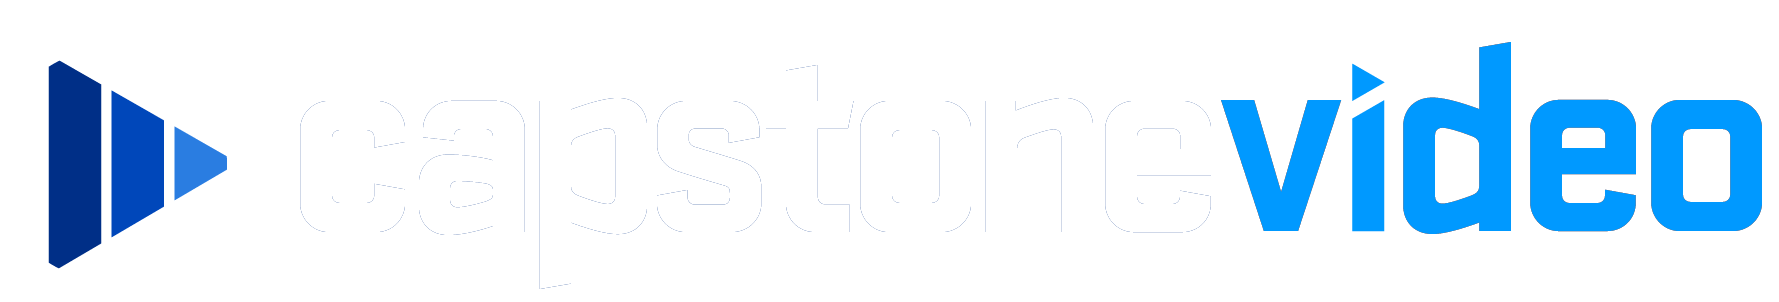 Capstone Video Marketing Logo 